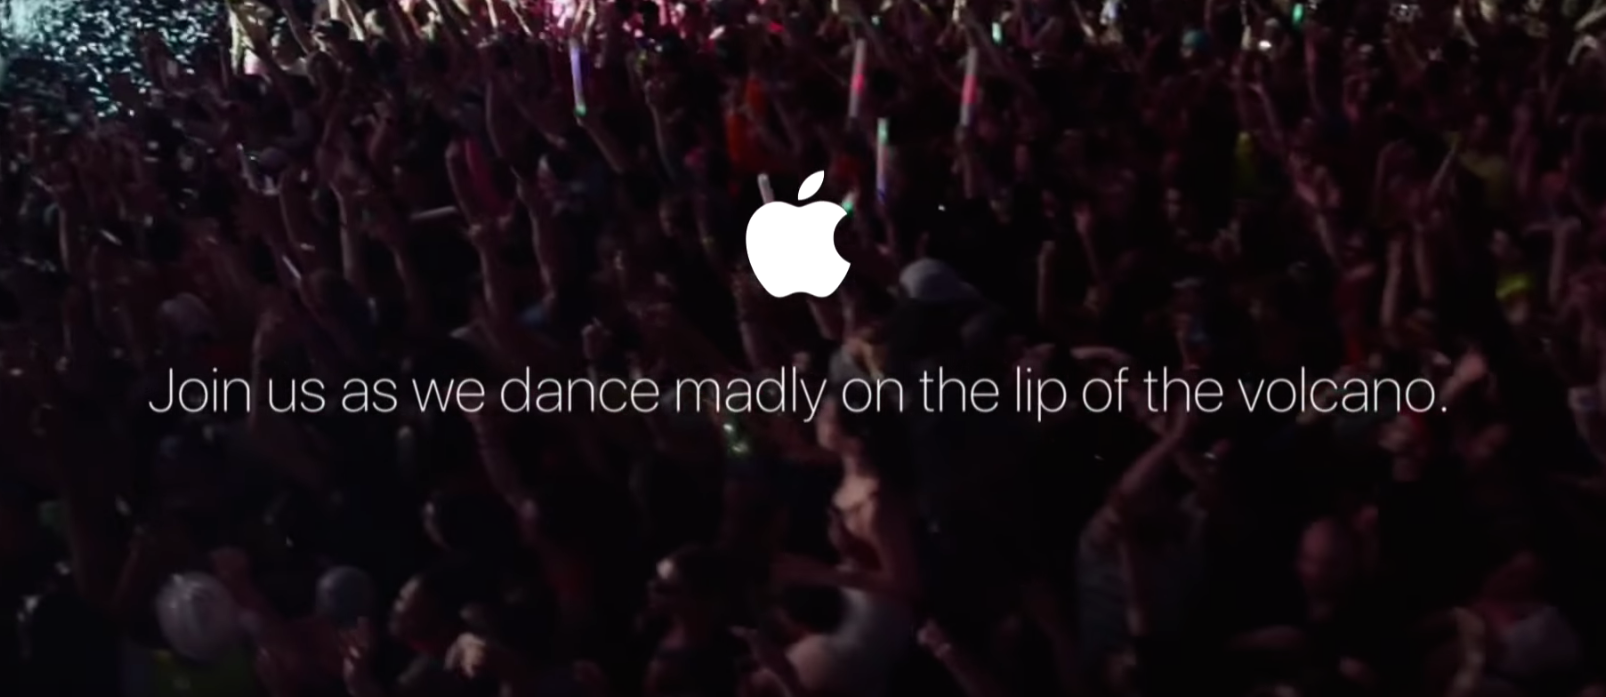 John Oliver Rewrites Apple Ads To Make Them More Honest About Encryption